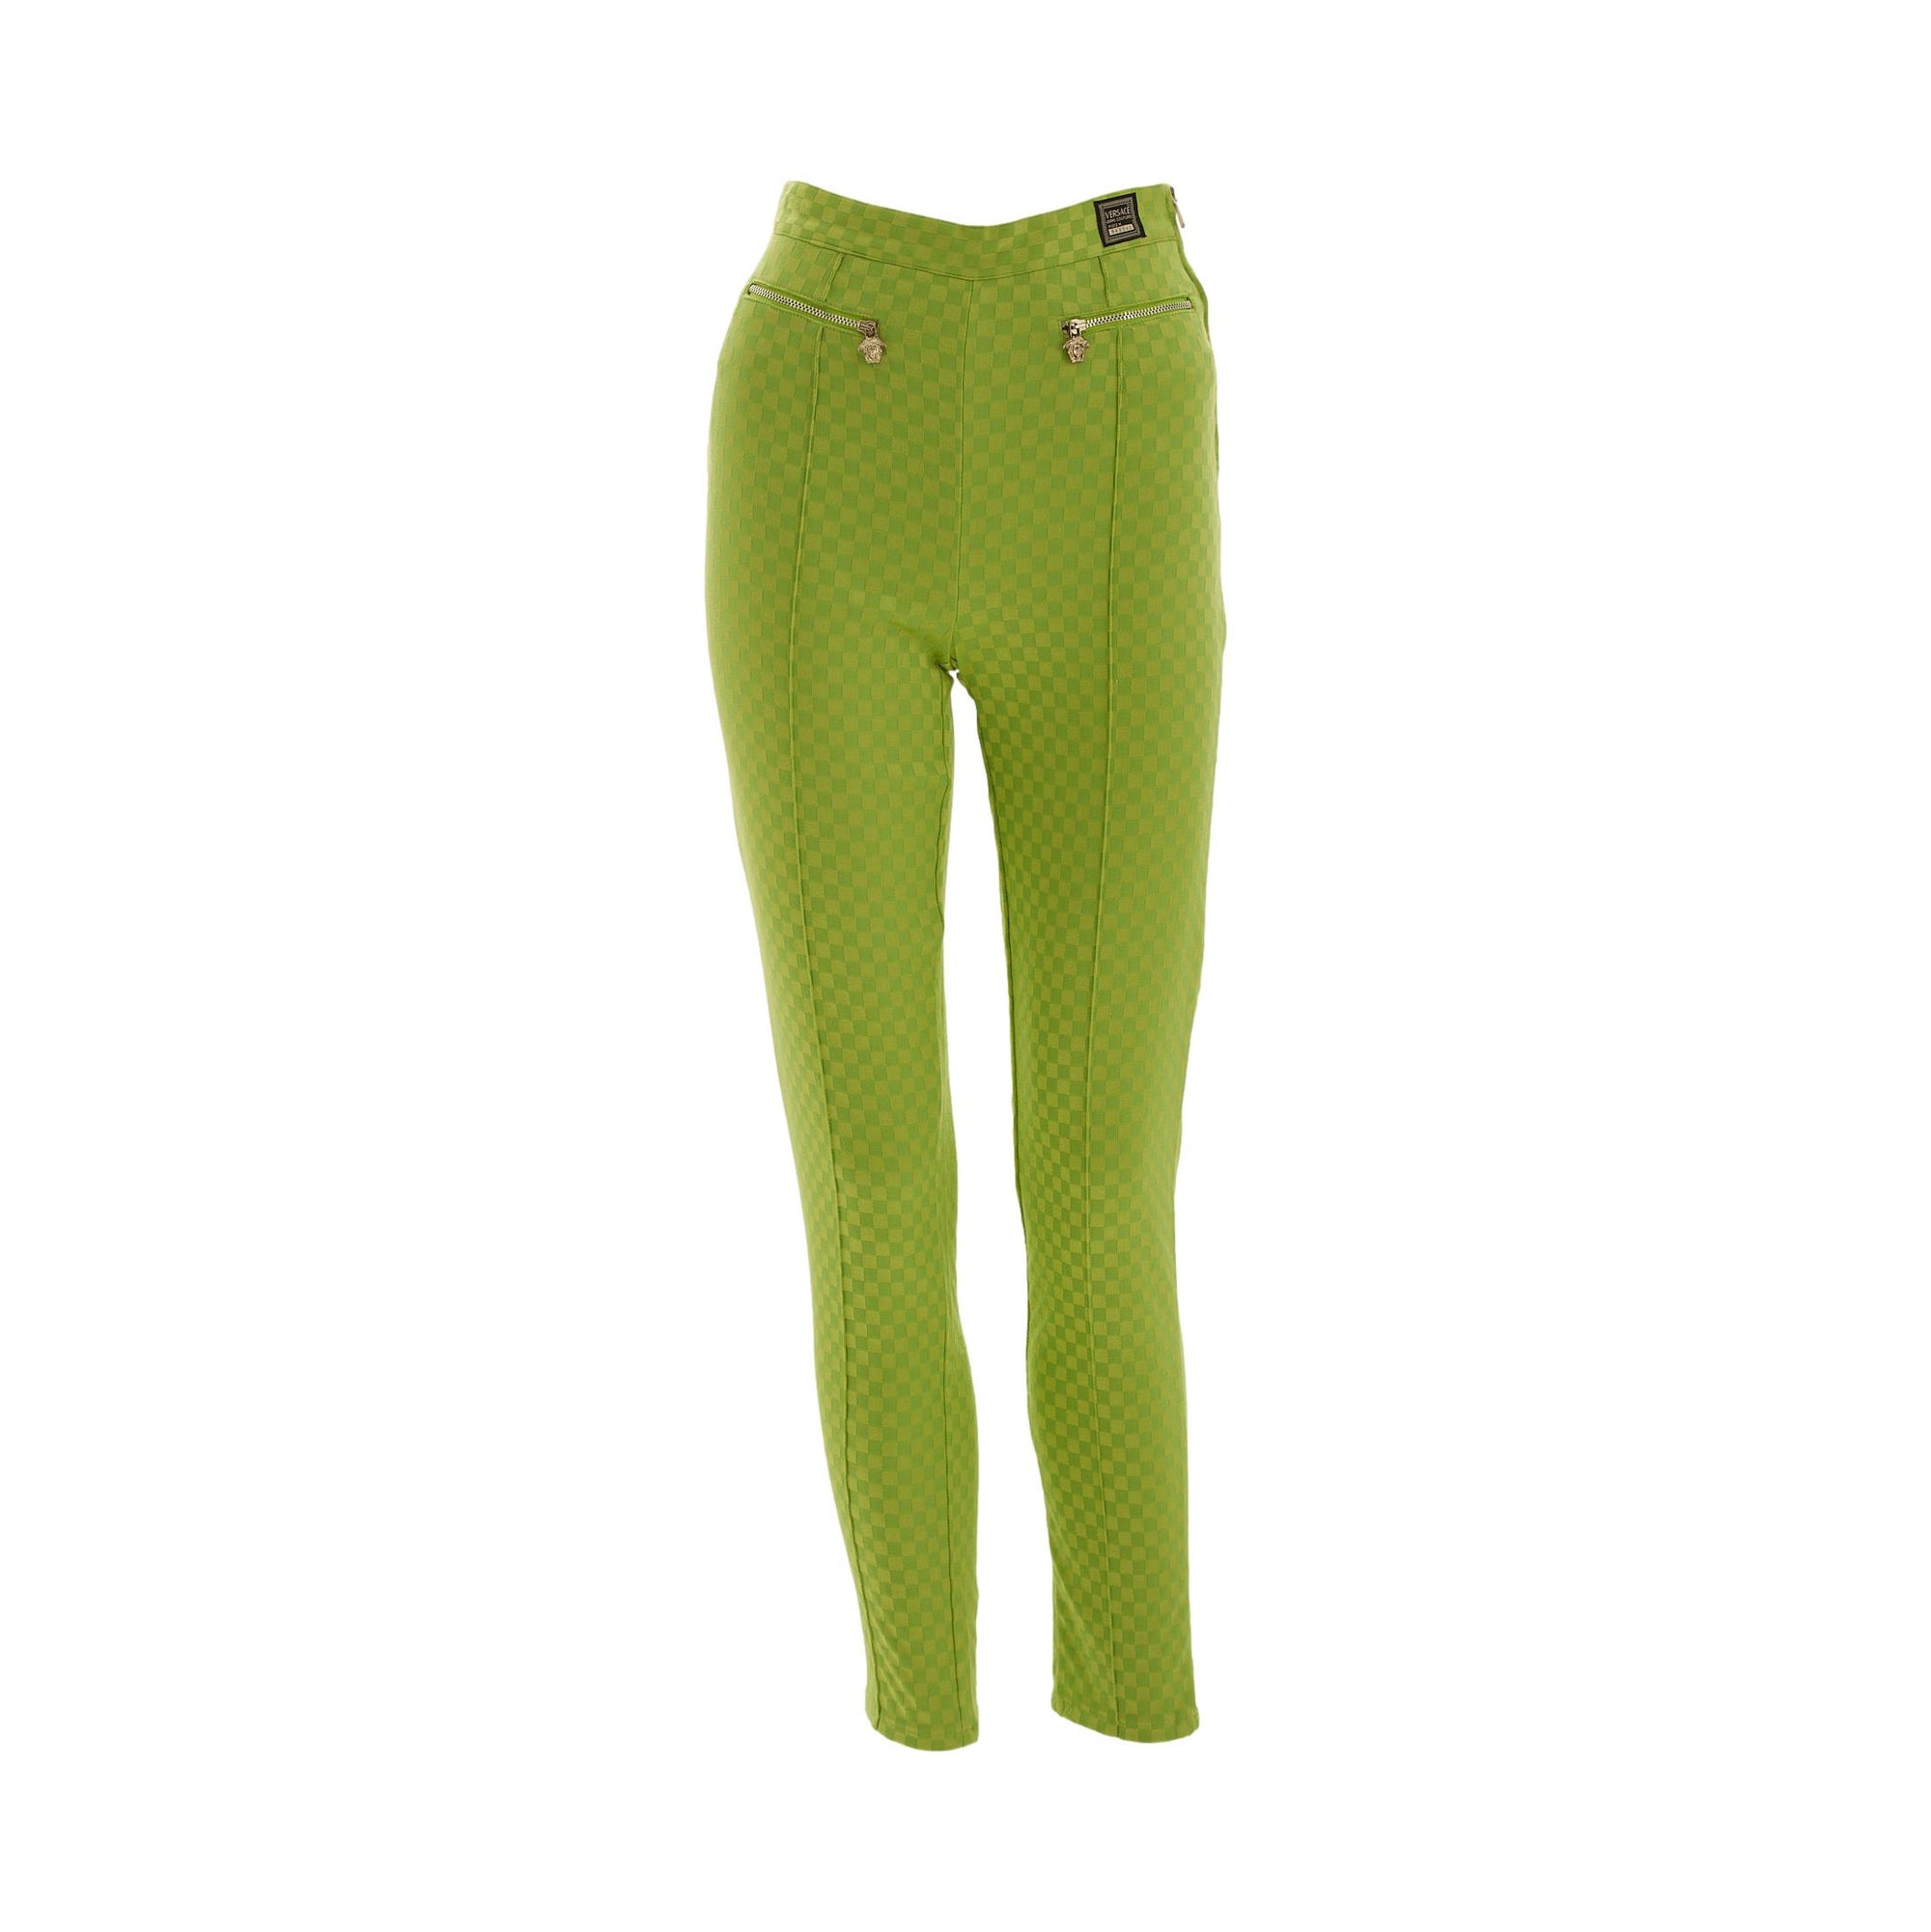 Versace Green Checkered Pants